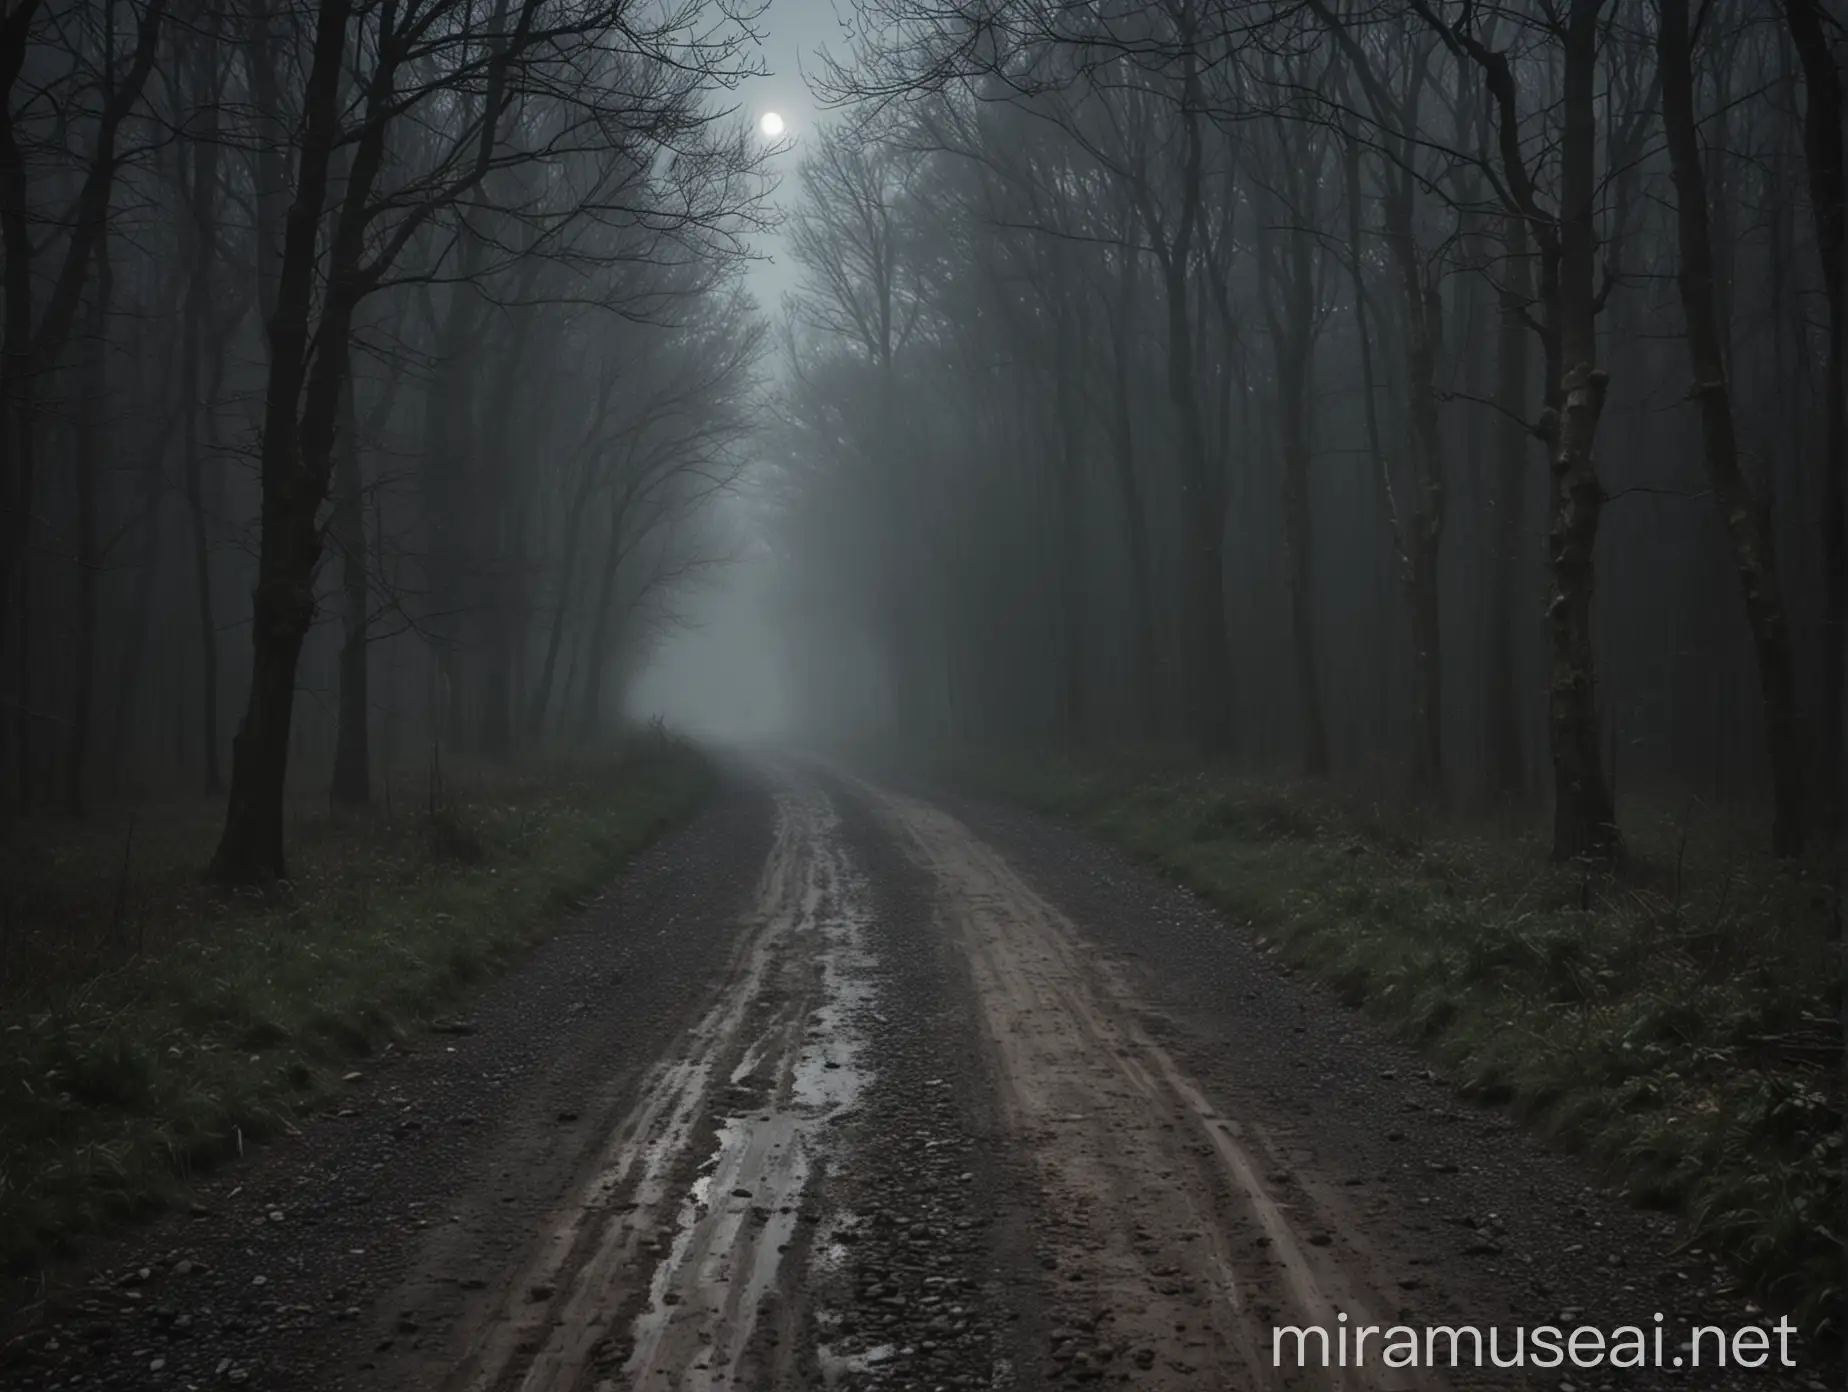 Eerie Night Scene Dark Dirt Road Through Haunted Woods